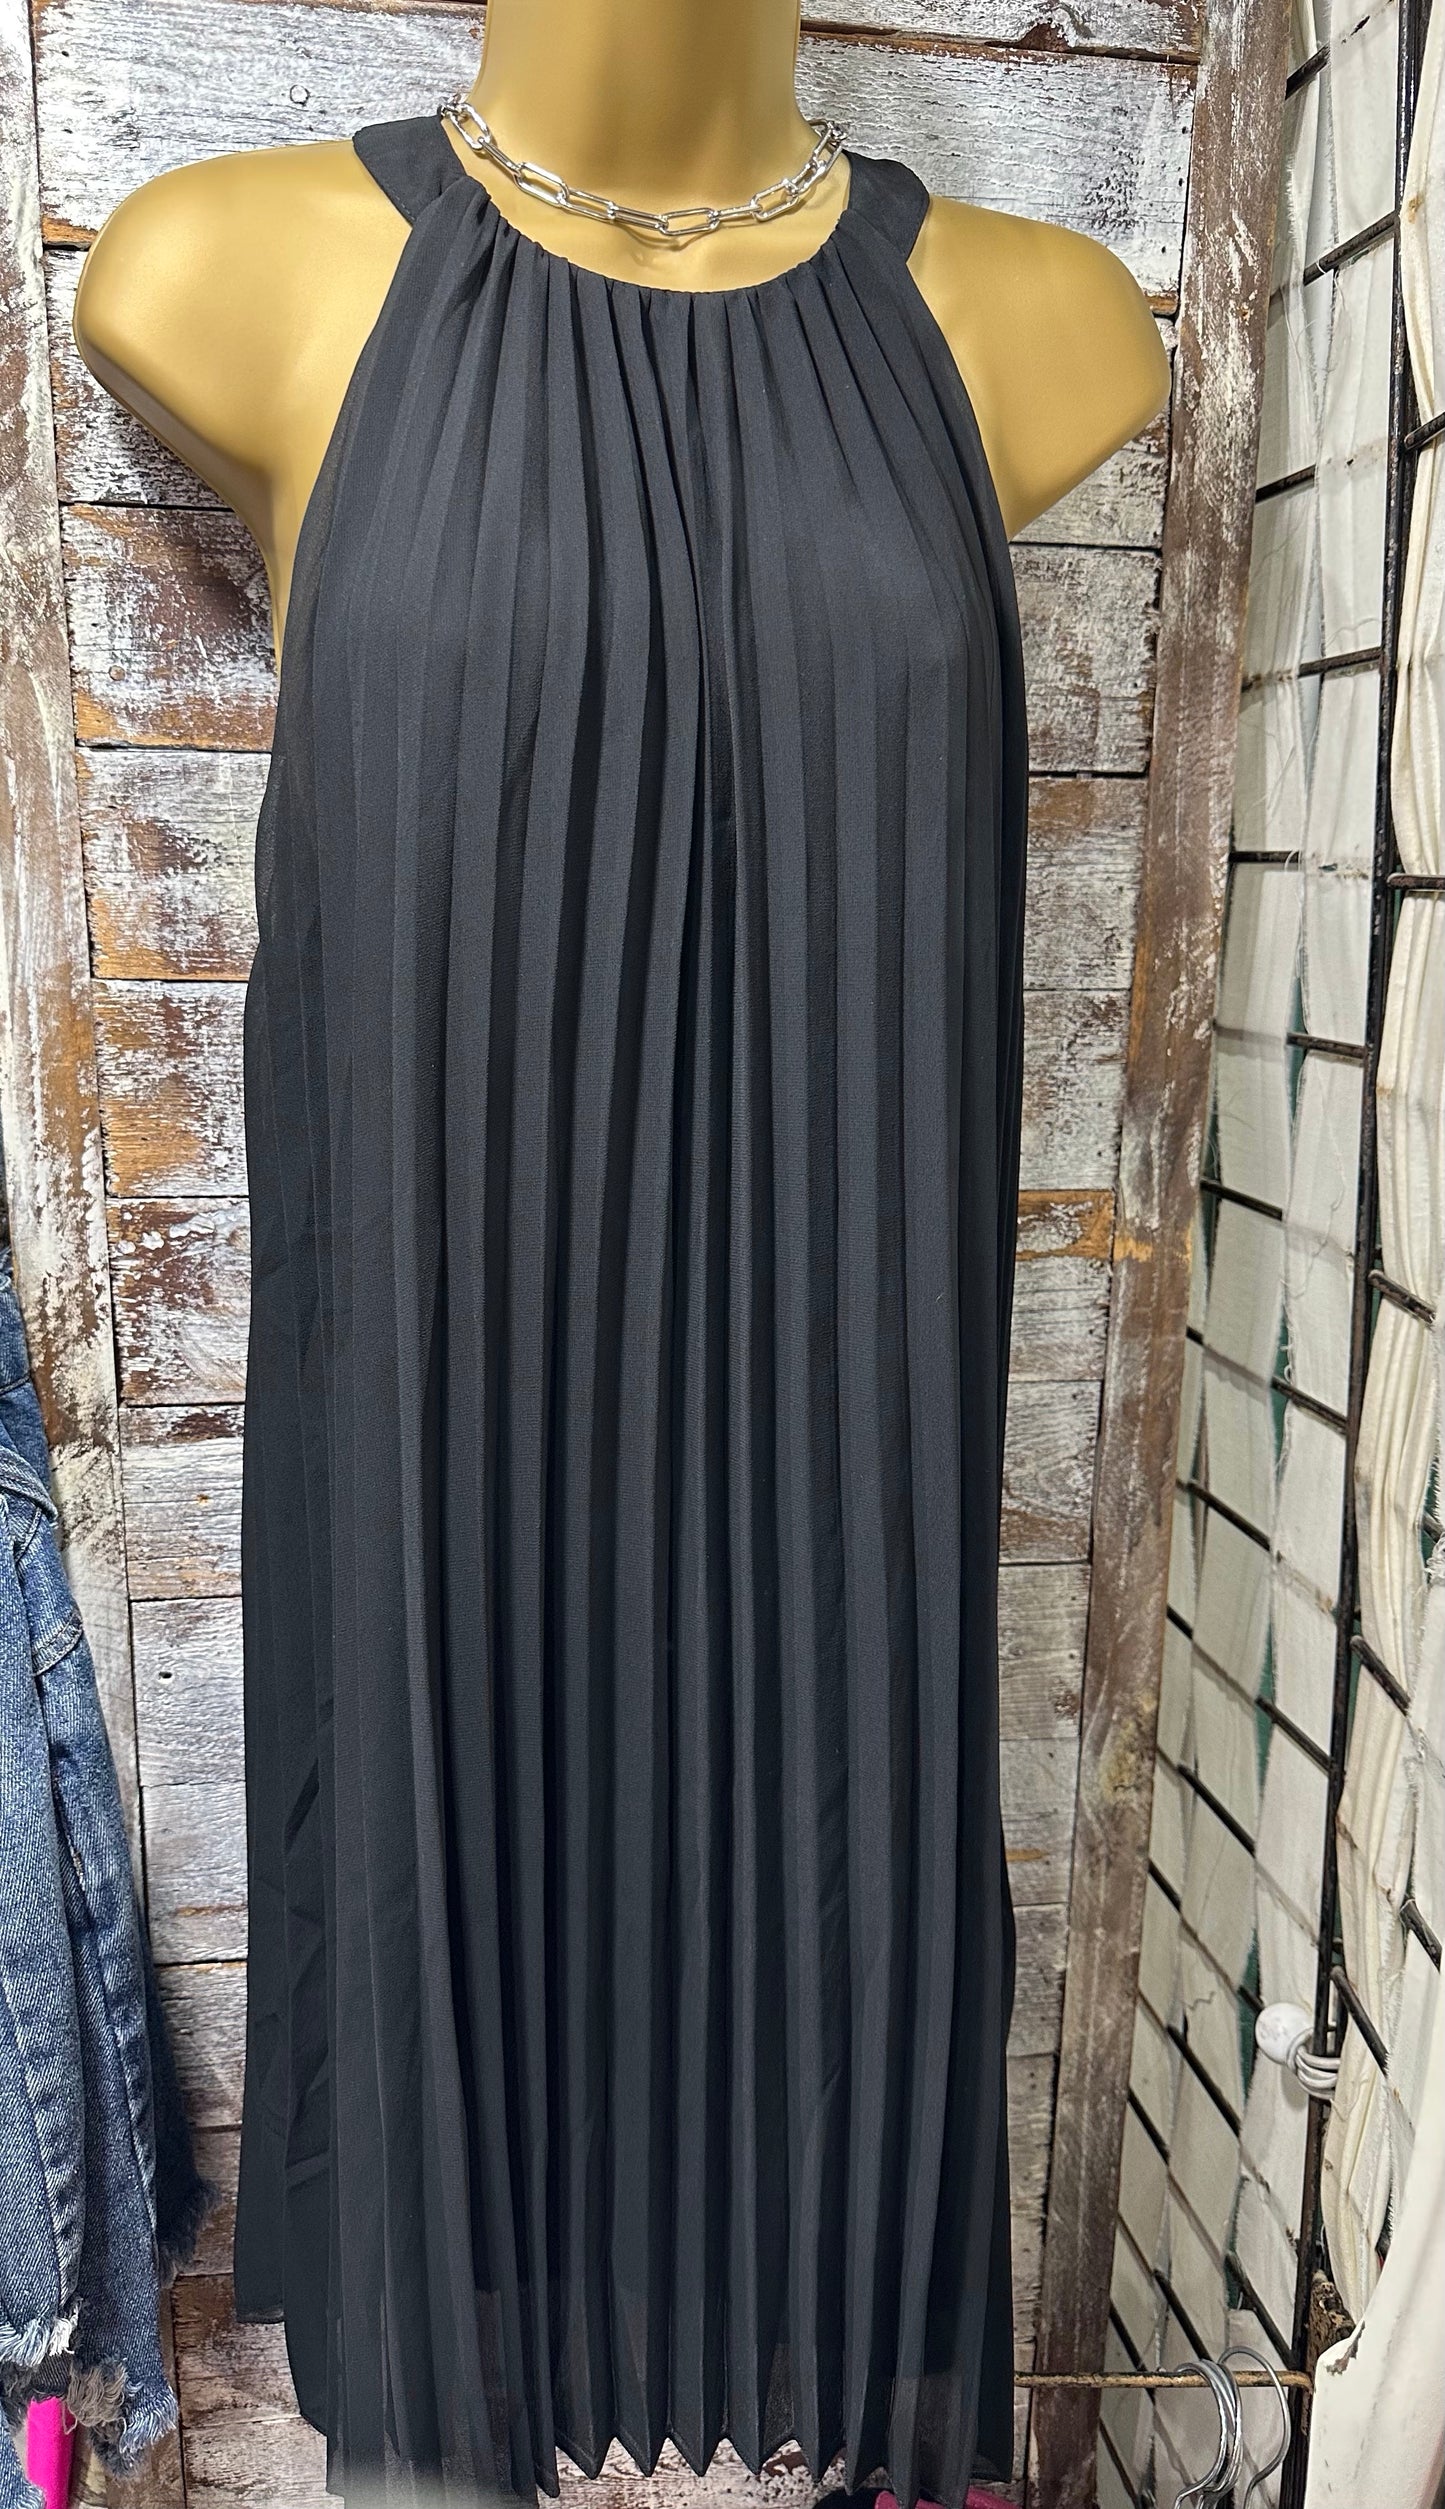 The Kristi Black Halter Dress